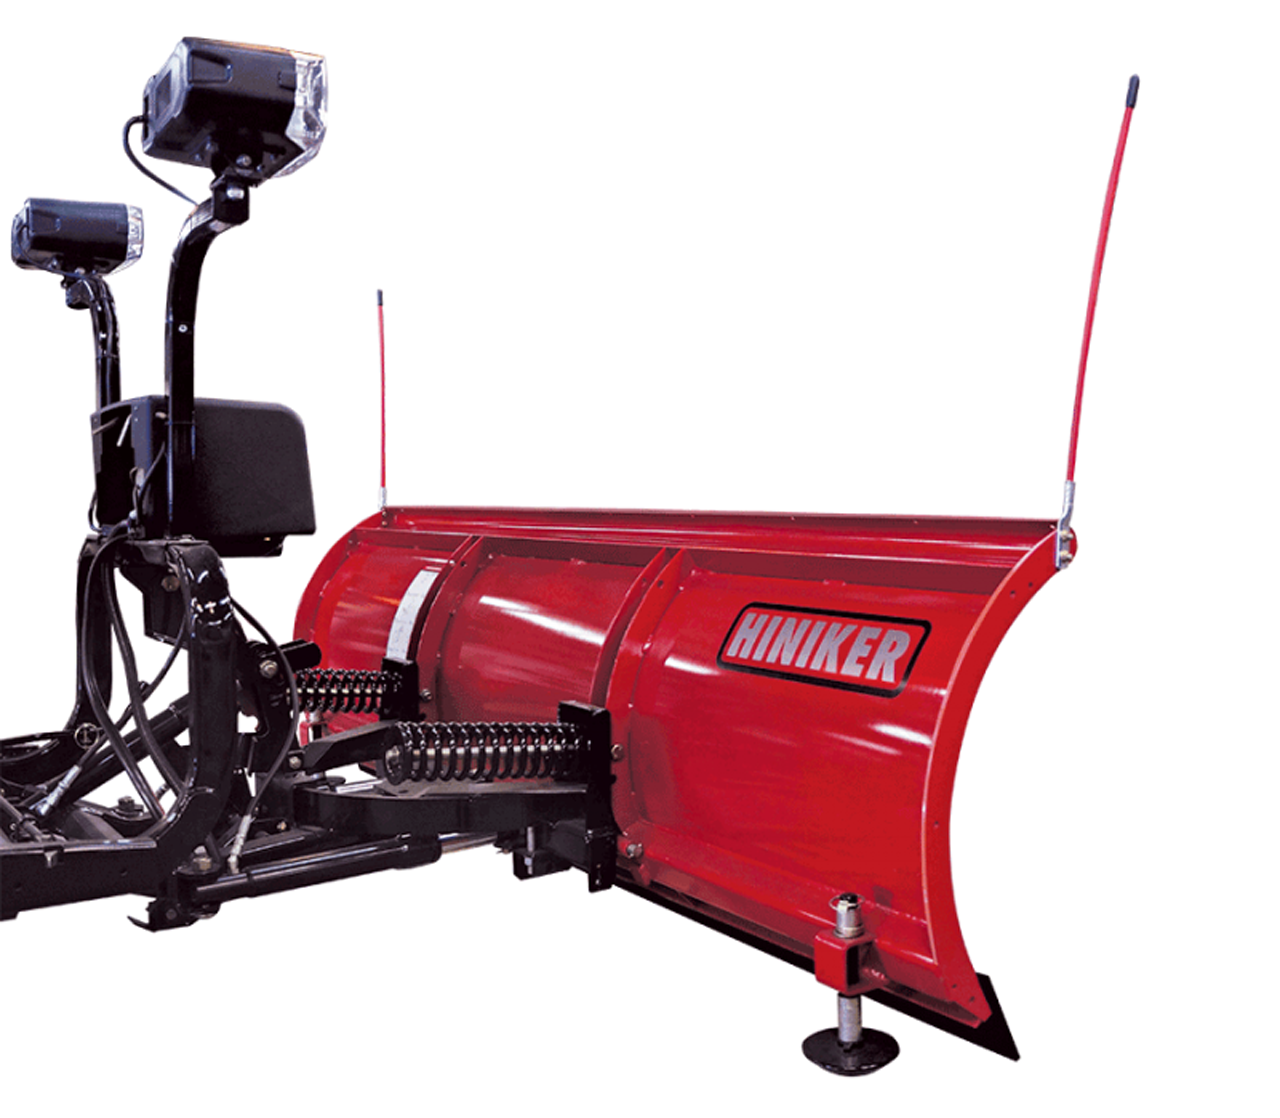 new-hiniker-model-2853-snow-plow-mounts-controls-manuals-truck-mounting-system-new-cost-1000000-cdn-big-5